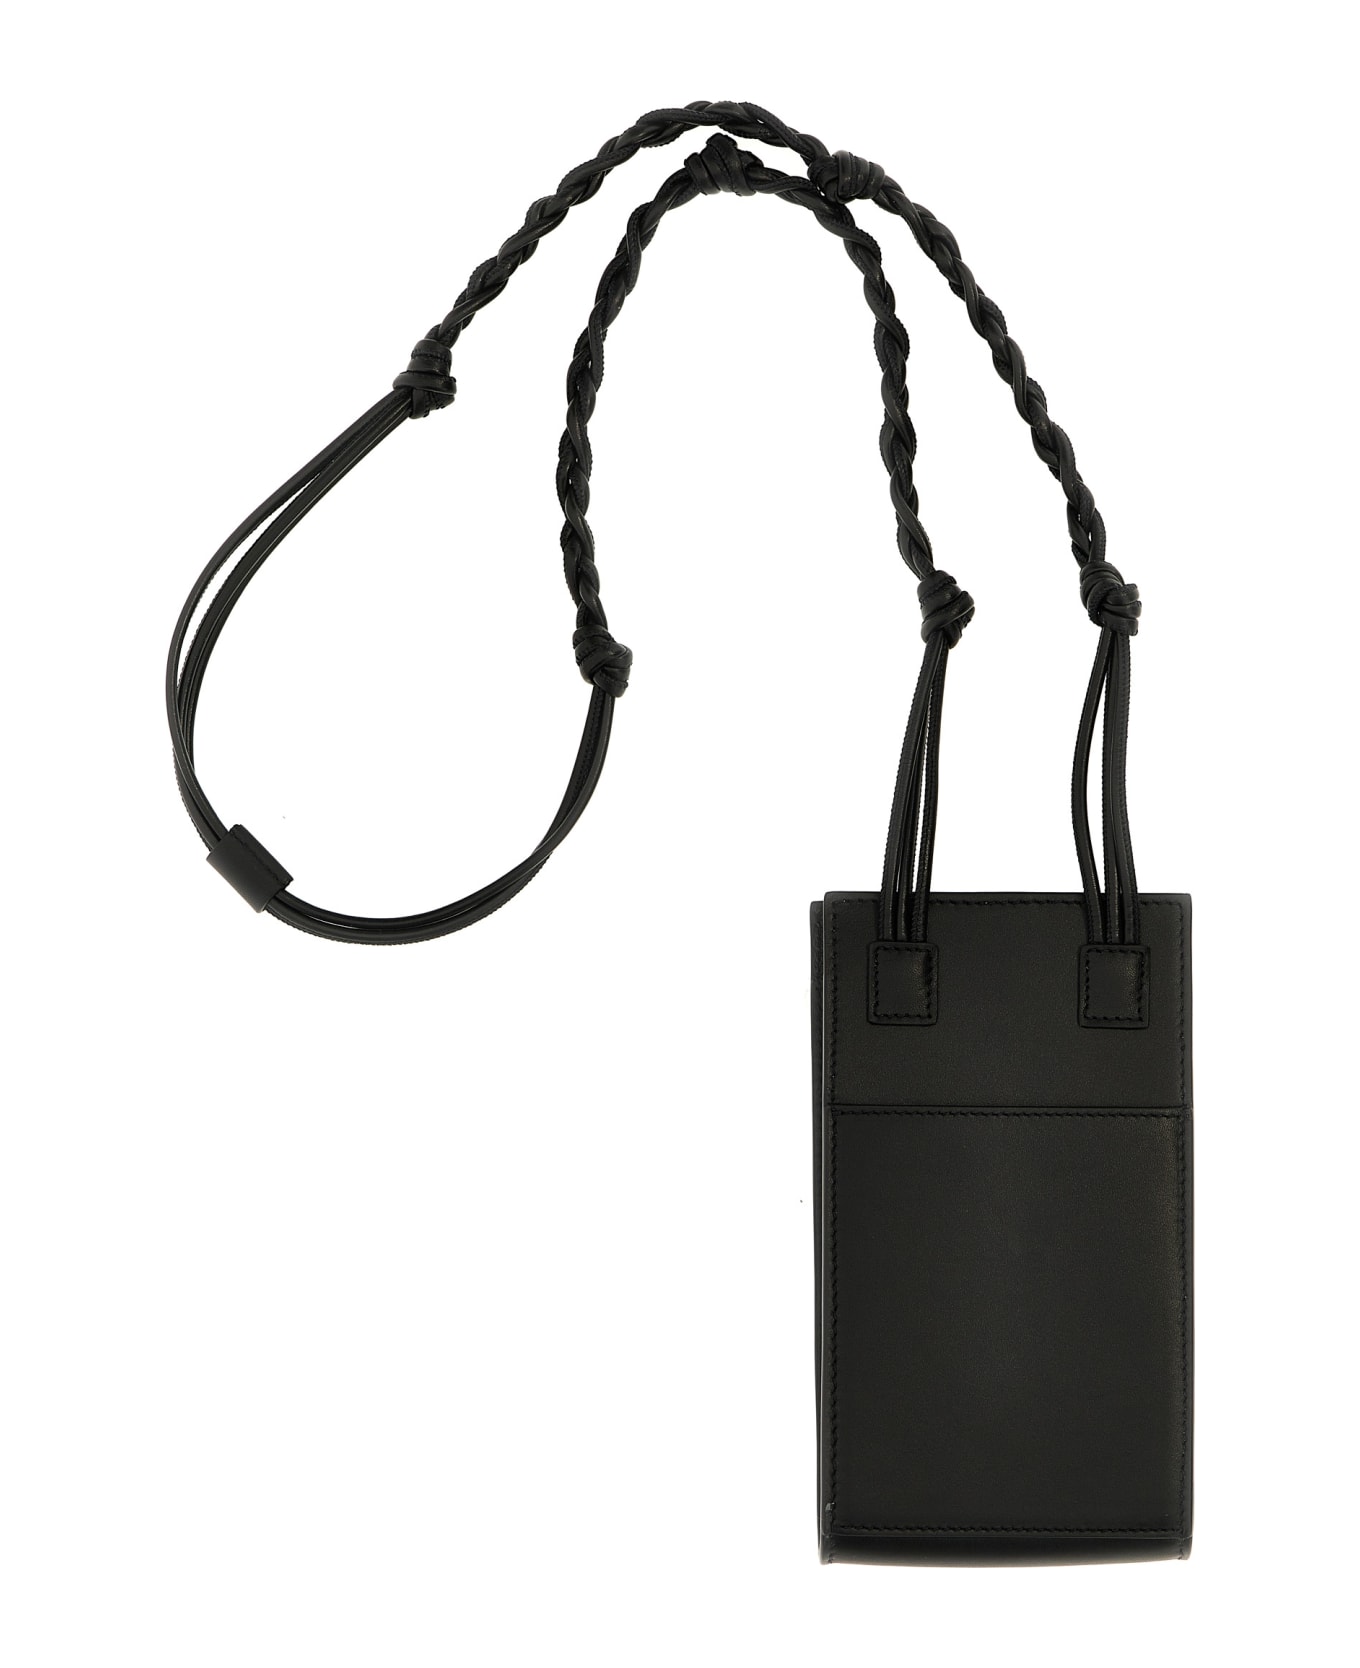 Jil Sander 'tangle' Smartphone Holder - Black   デジタルアクセサリー